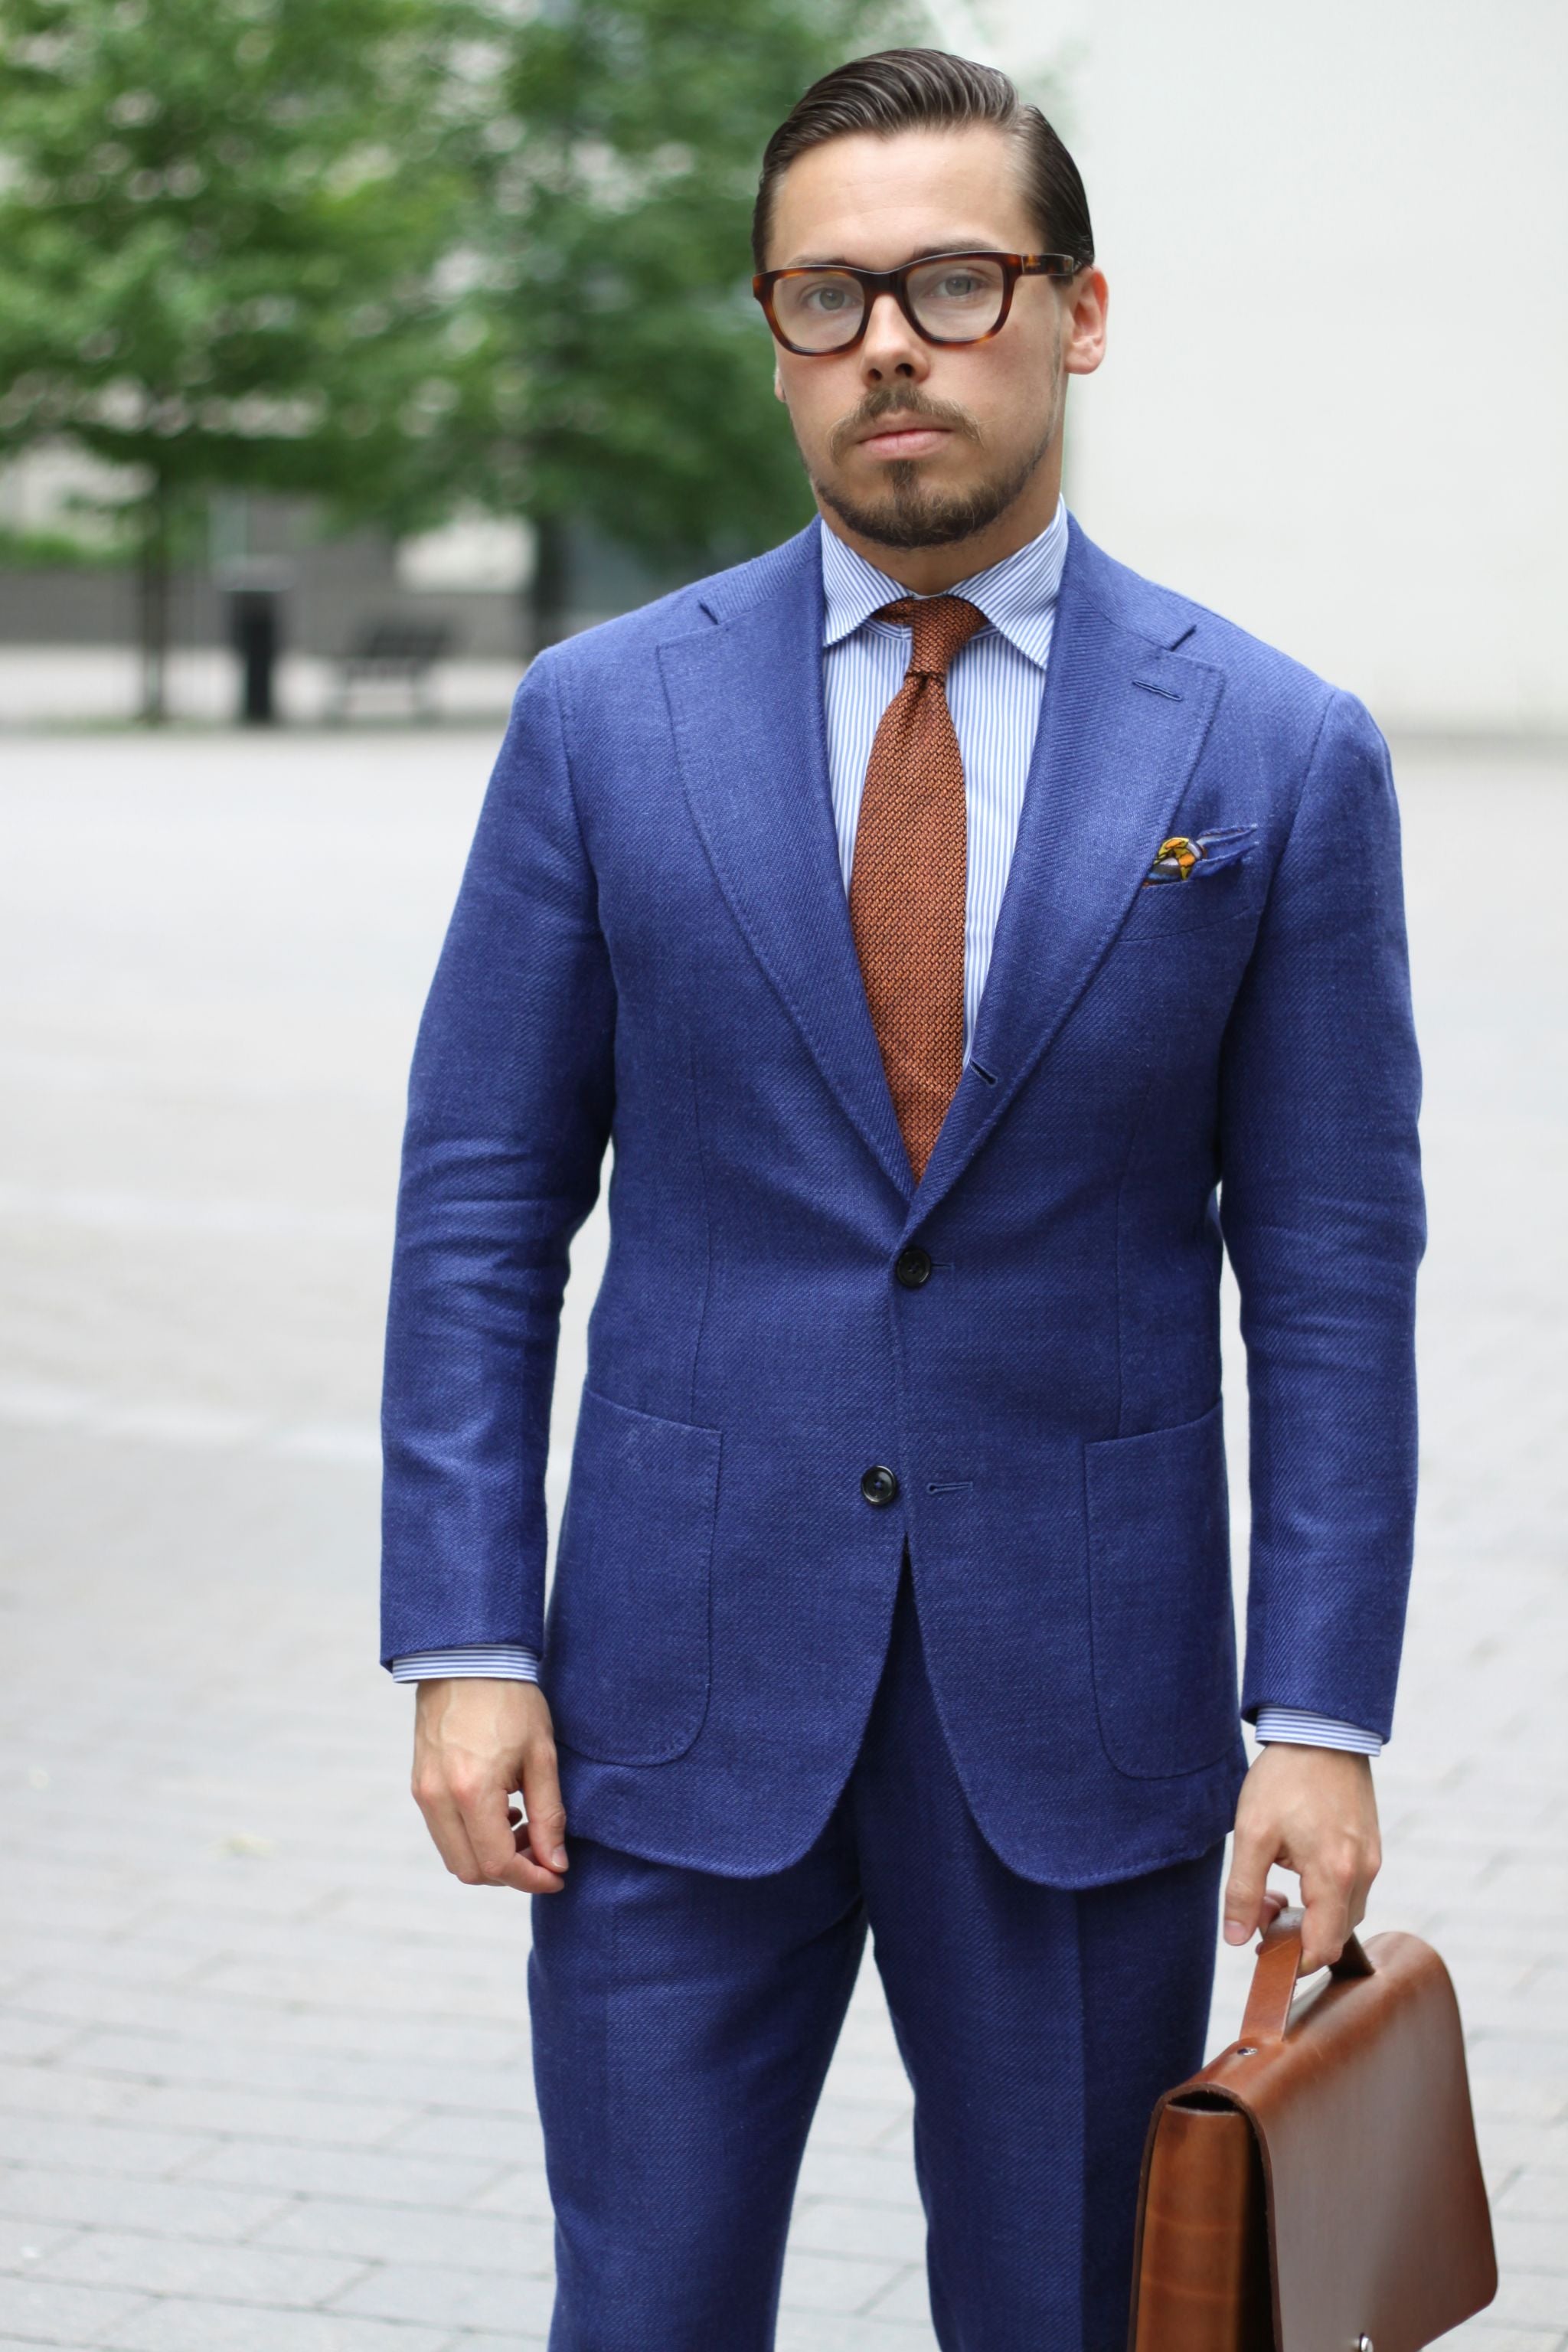 Orange tie x Blue suit – Dress Like A